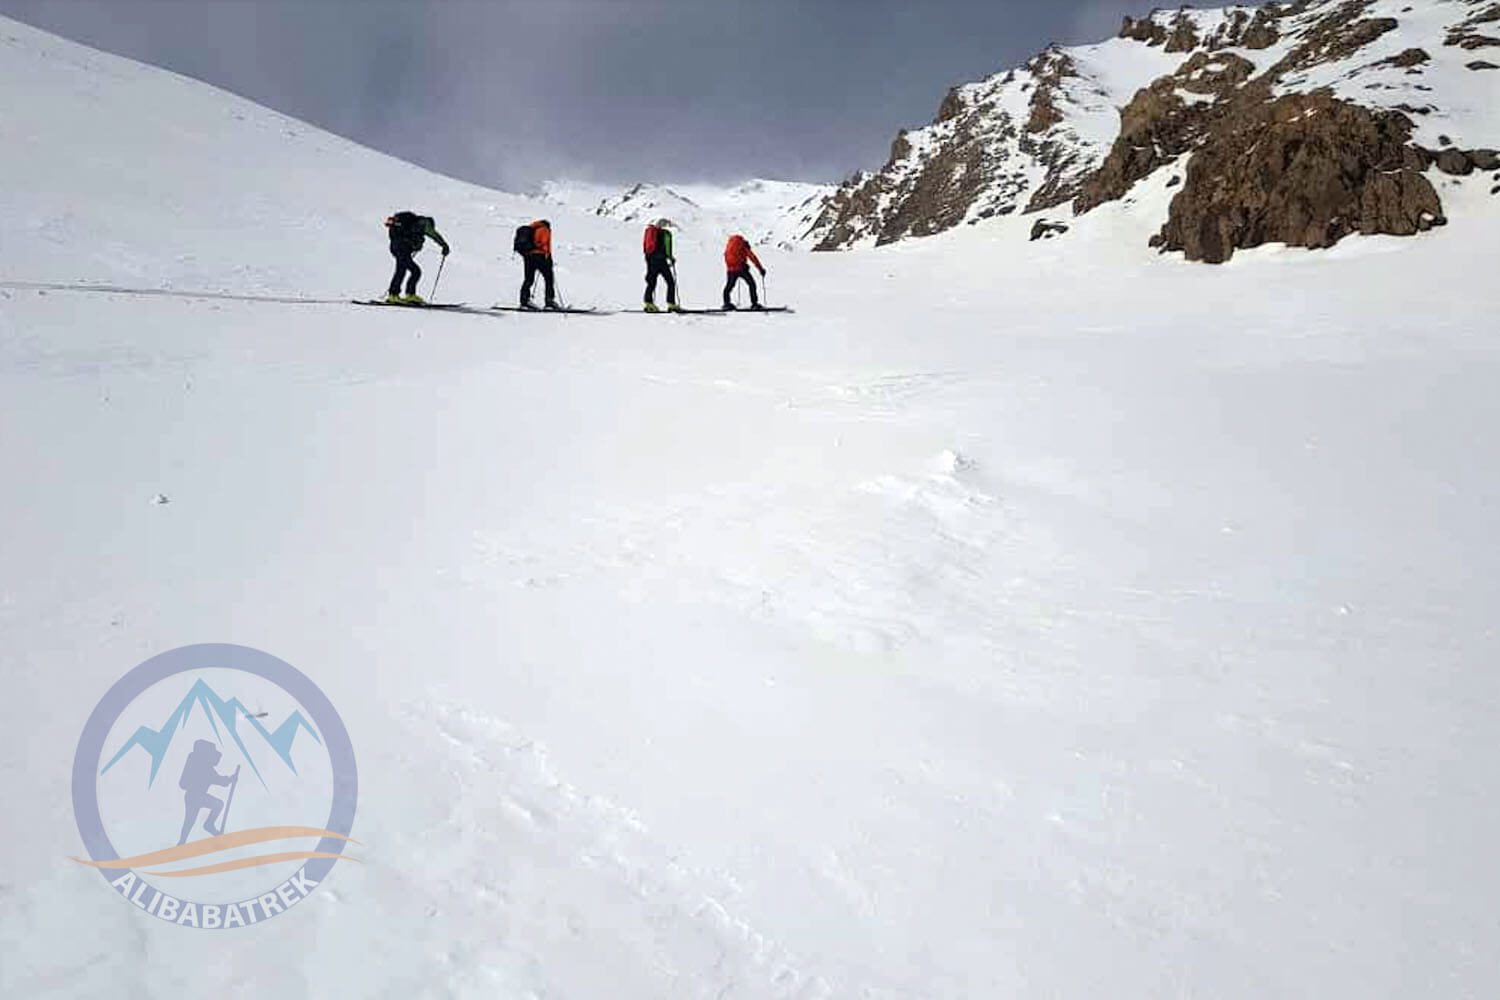 Alibabatrek iran tour Packages skiing in Iran ski touring iran ski mountaineering iran back country skiing ski alamkuh alamkuh ski tour alamkuh ski touring iran ski deals iran wild ski